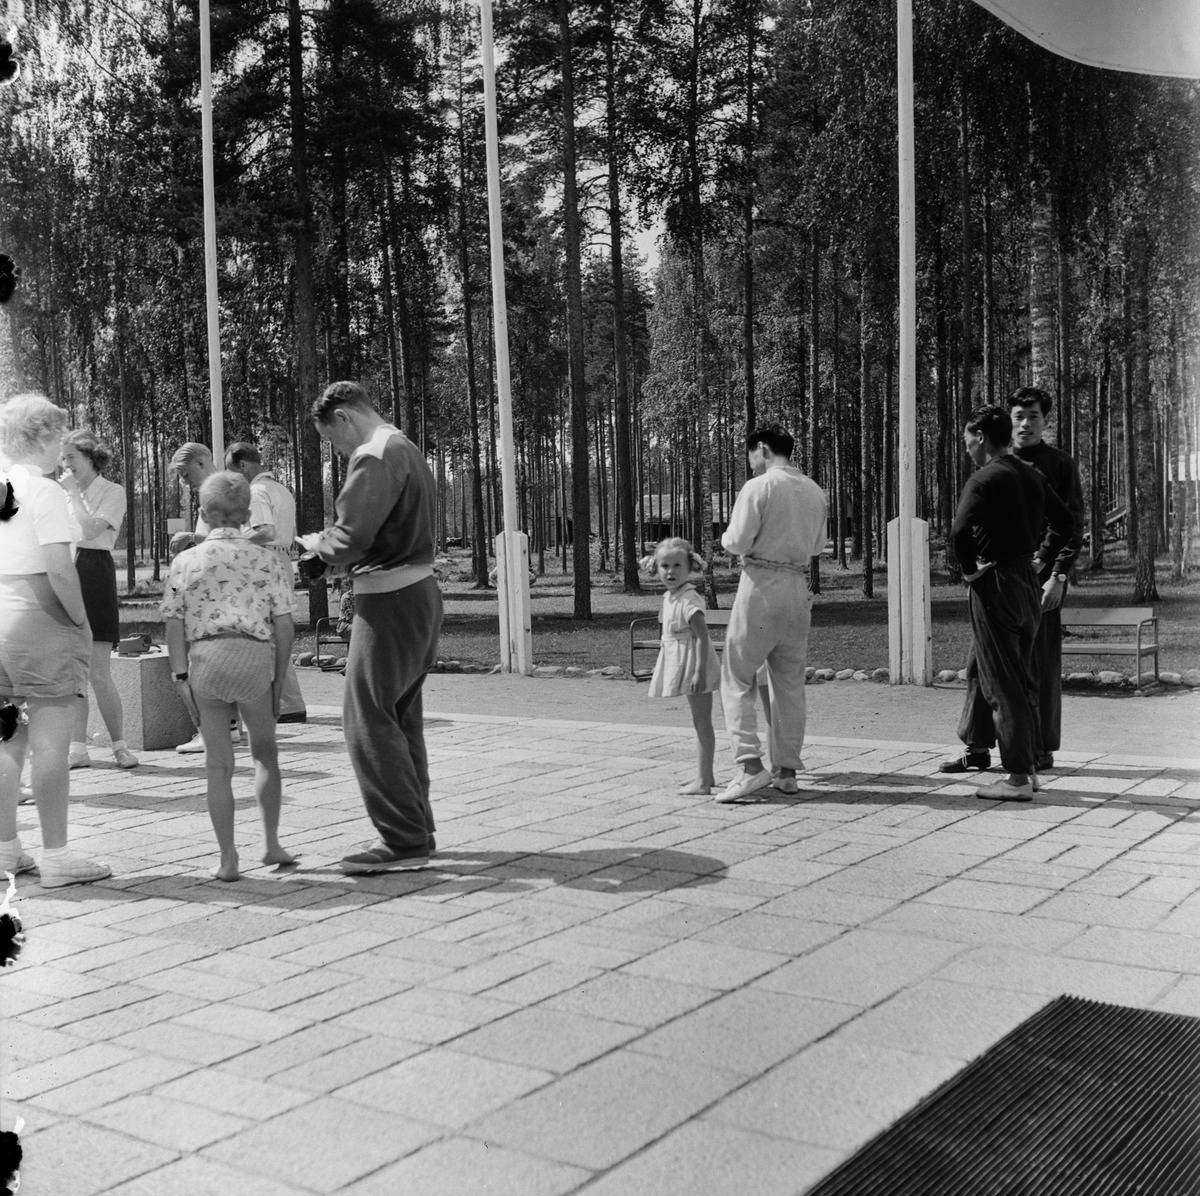 Helsingin olympialaiset 1952